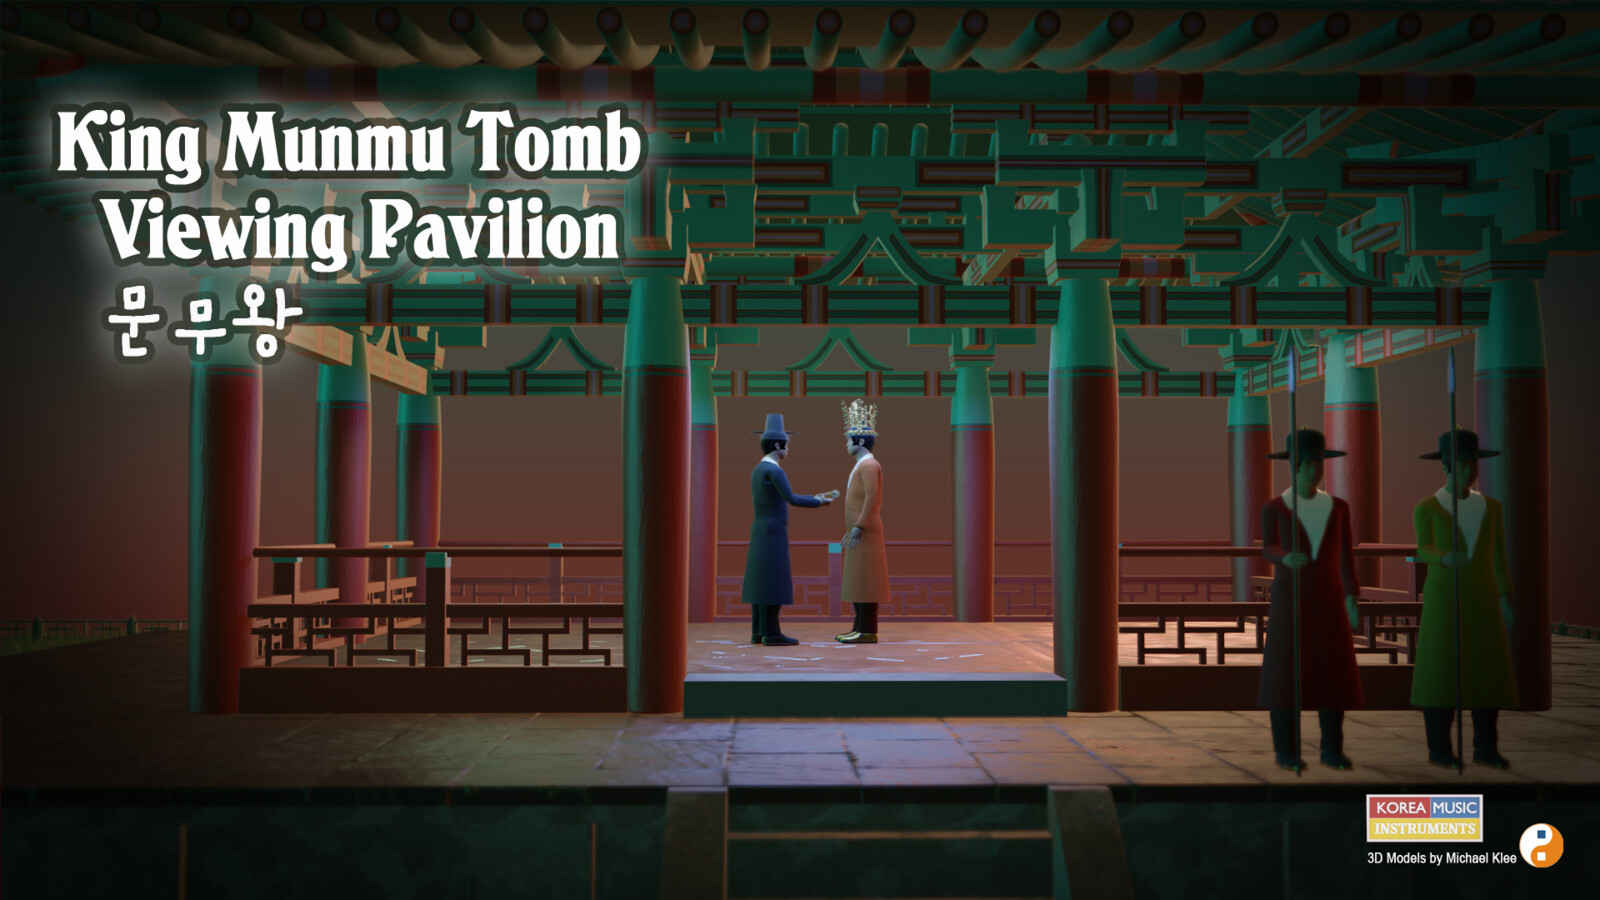 Pavilion for King Munmu